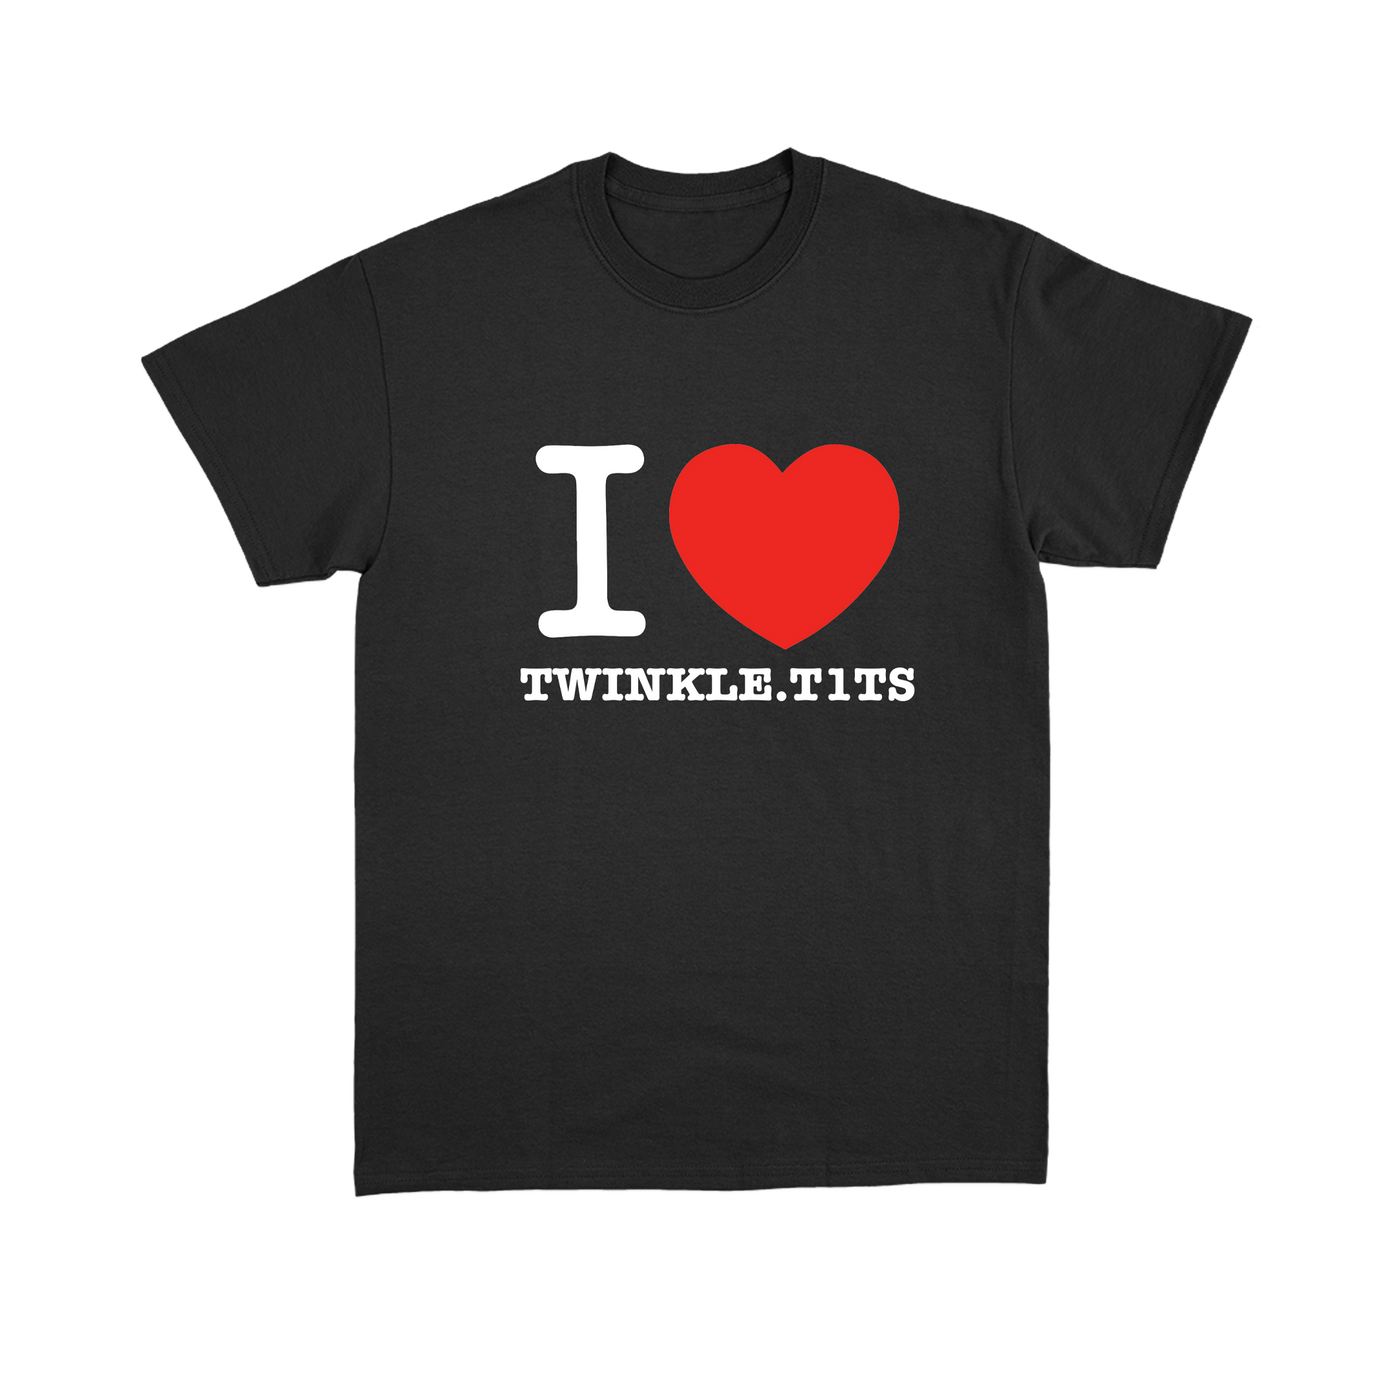 I Love Twinkle.T1ts Tee